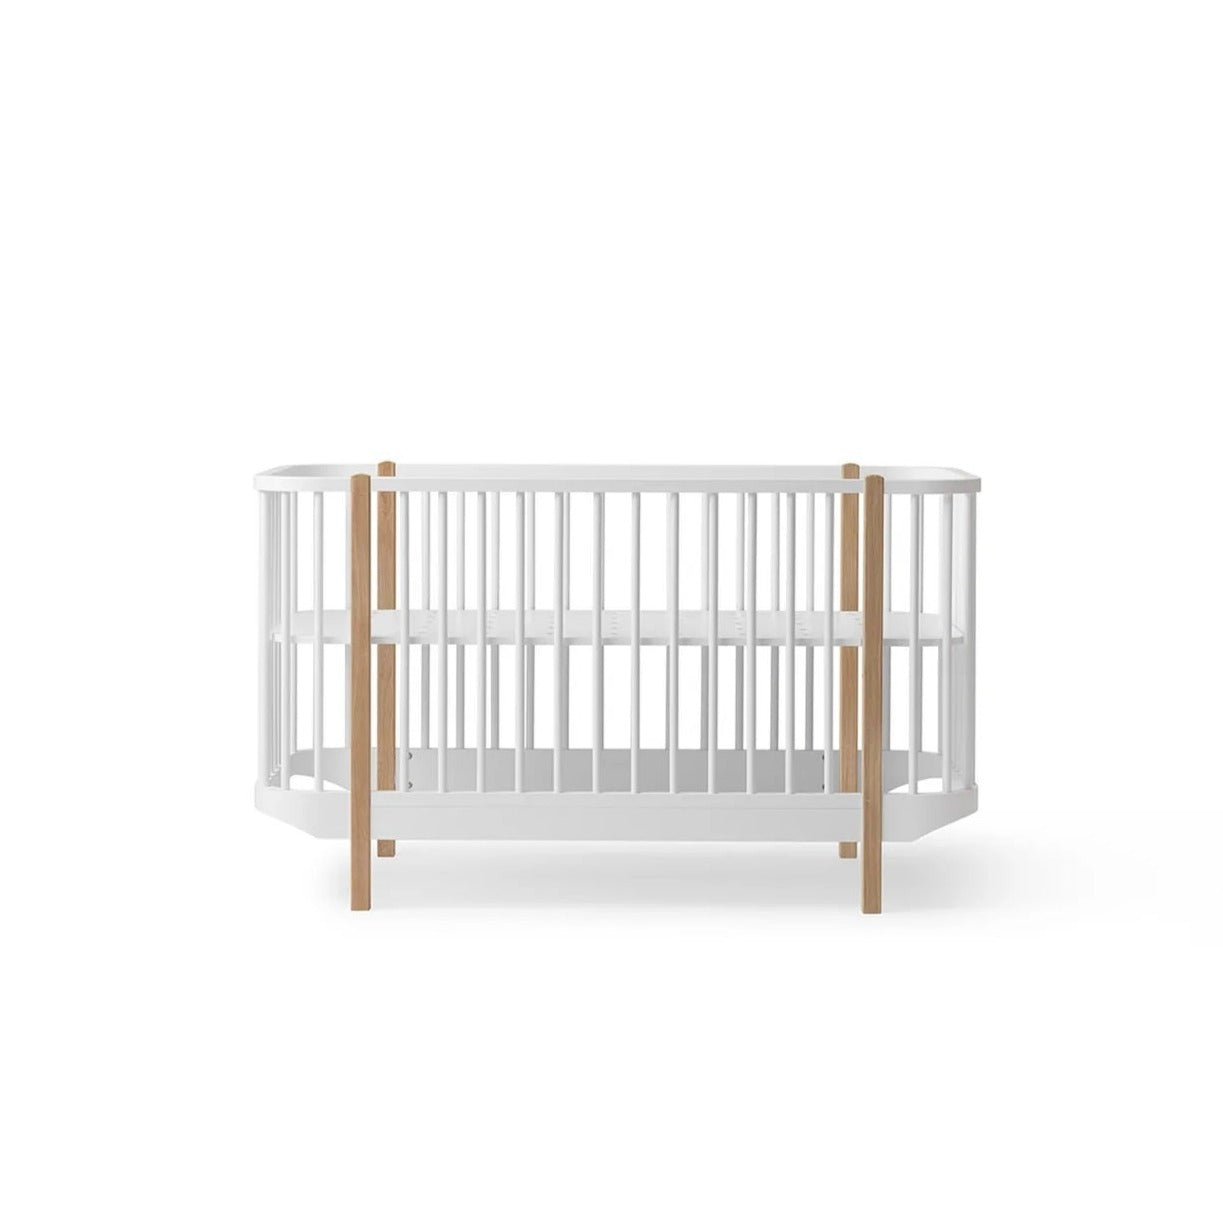 Oliver Furniture Wood Cot - White/Oak